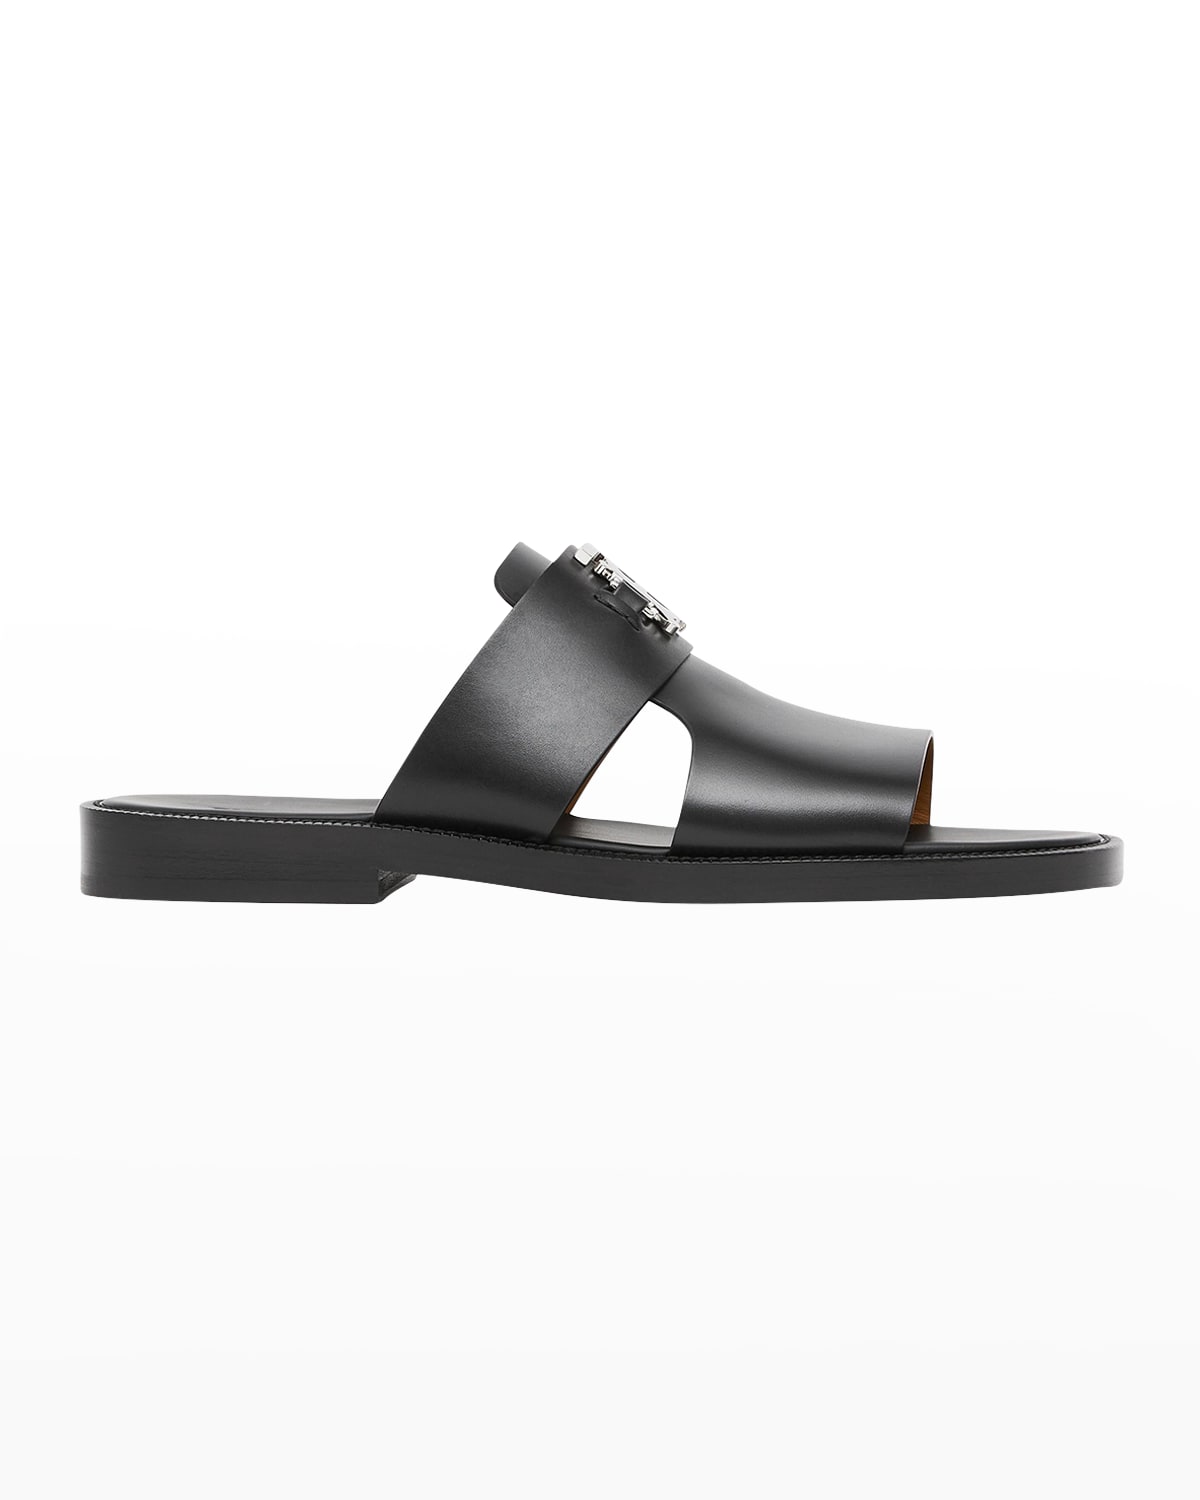 Burberry Sloane TB Leather Slide Sandals | Neiman Marcus